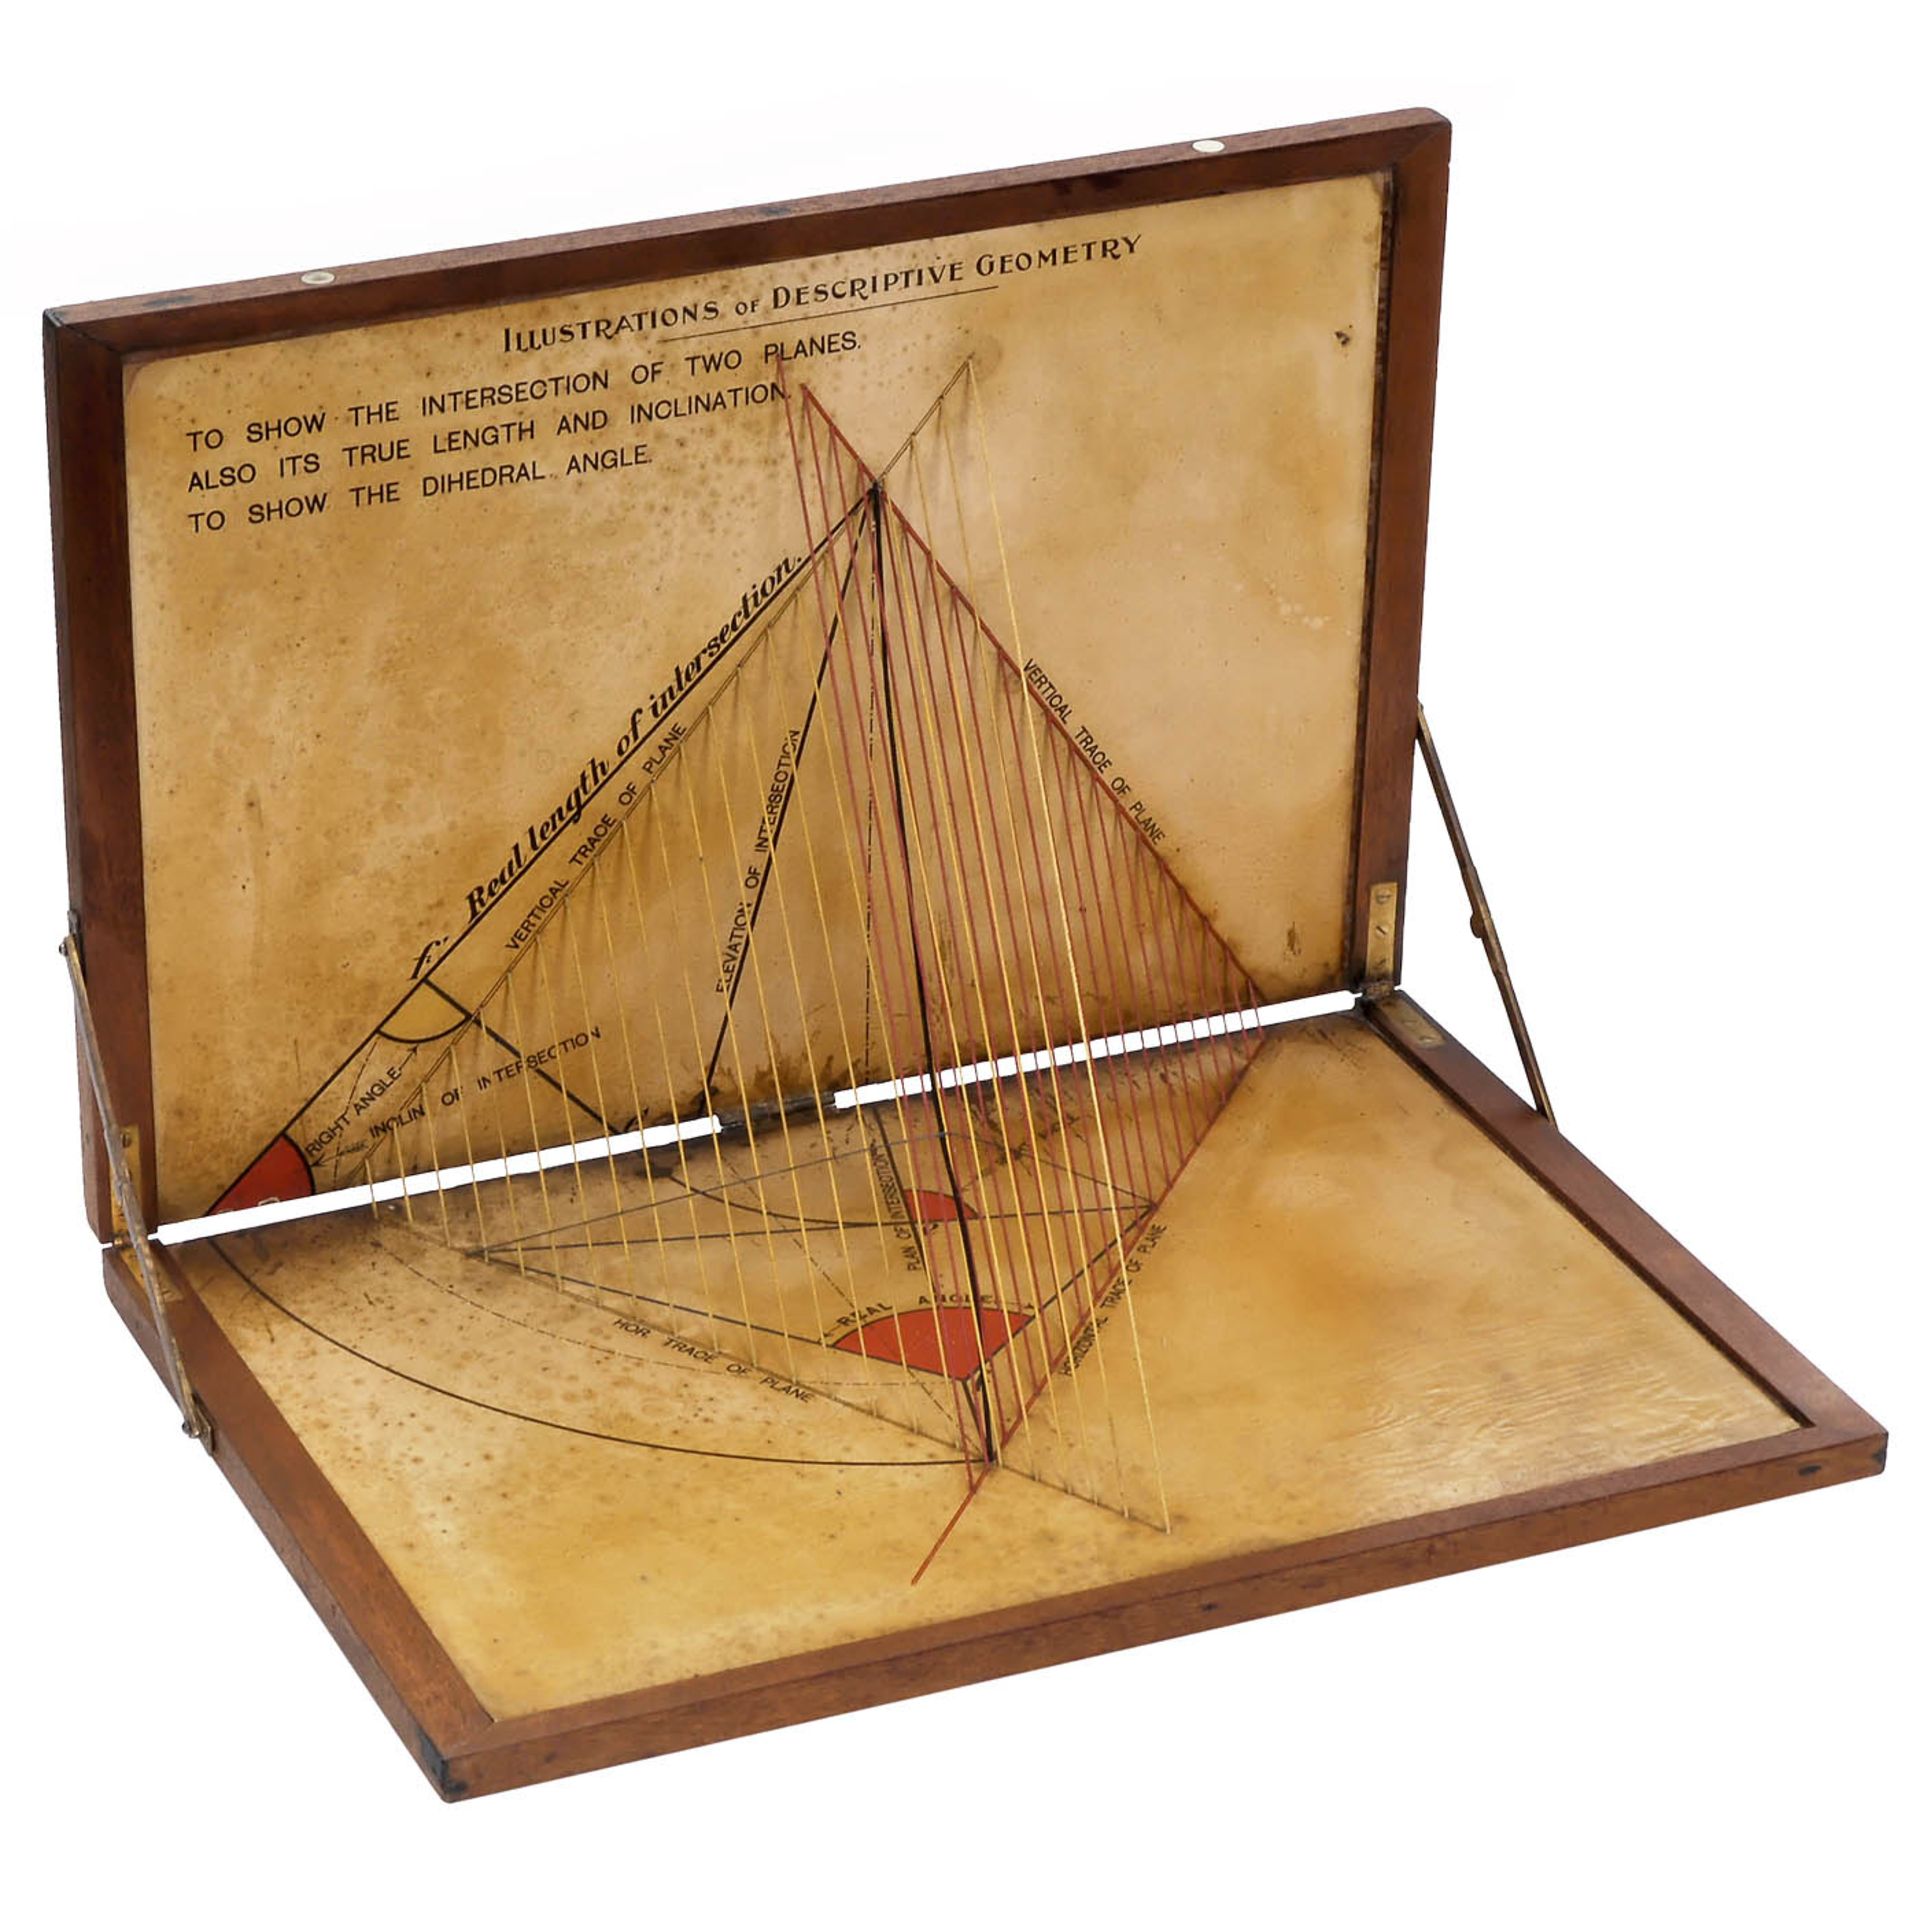 Two Descriptive Geometry Teaching Models, c. 1930 - Image 2 of 3